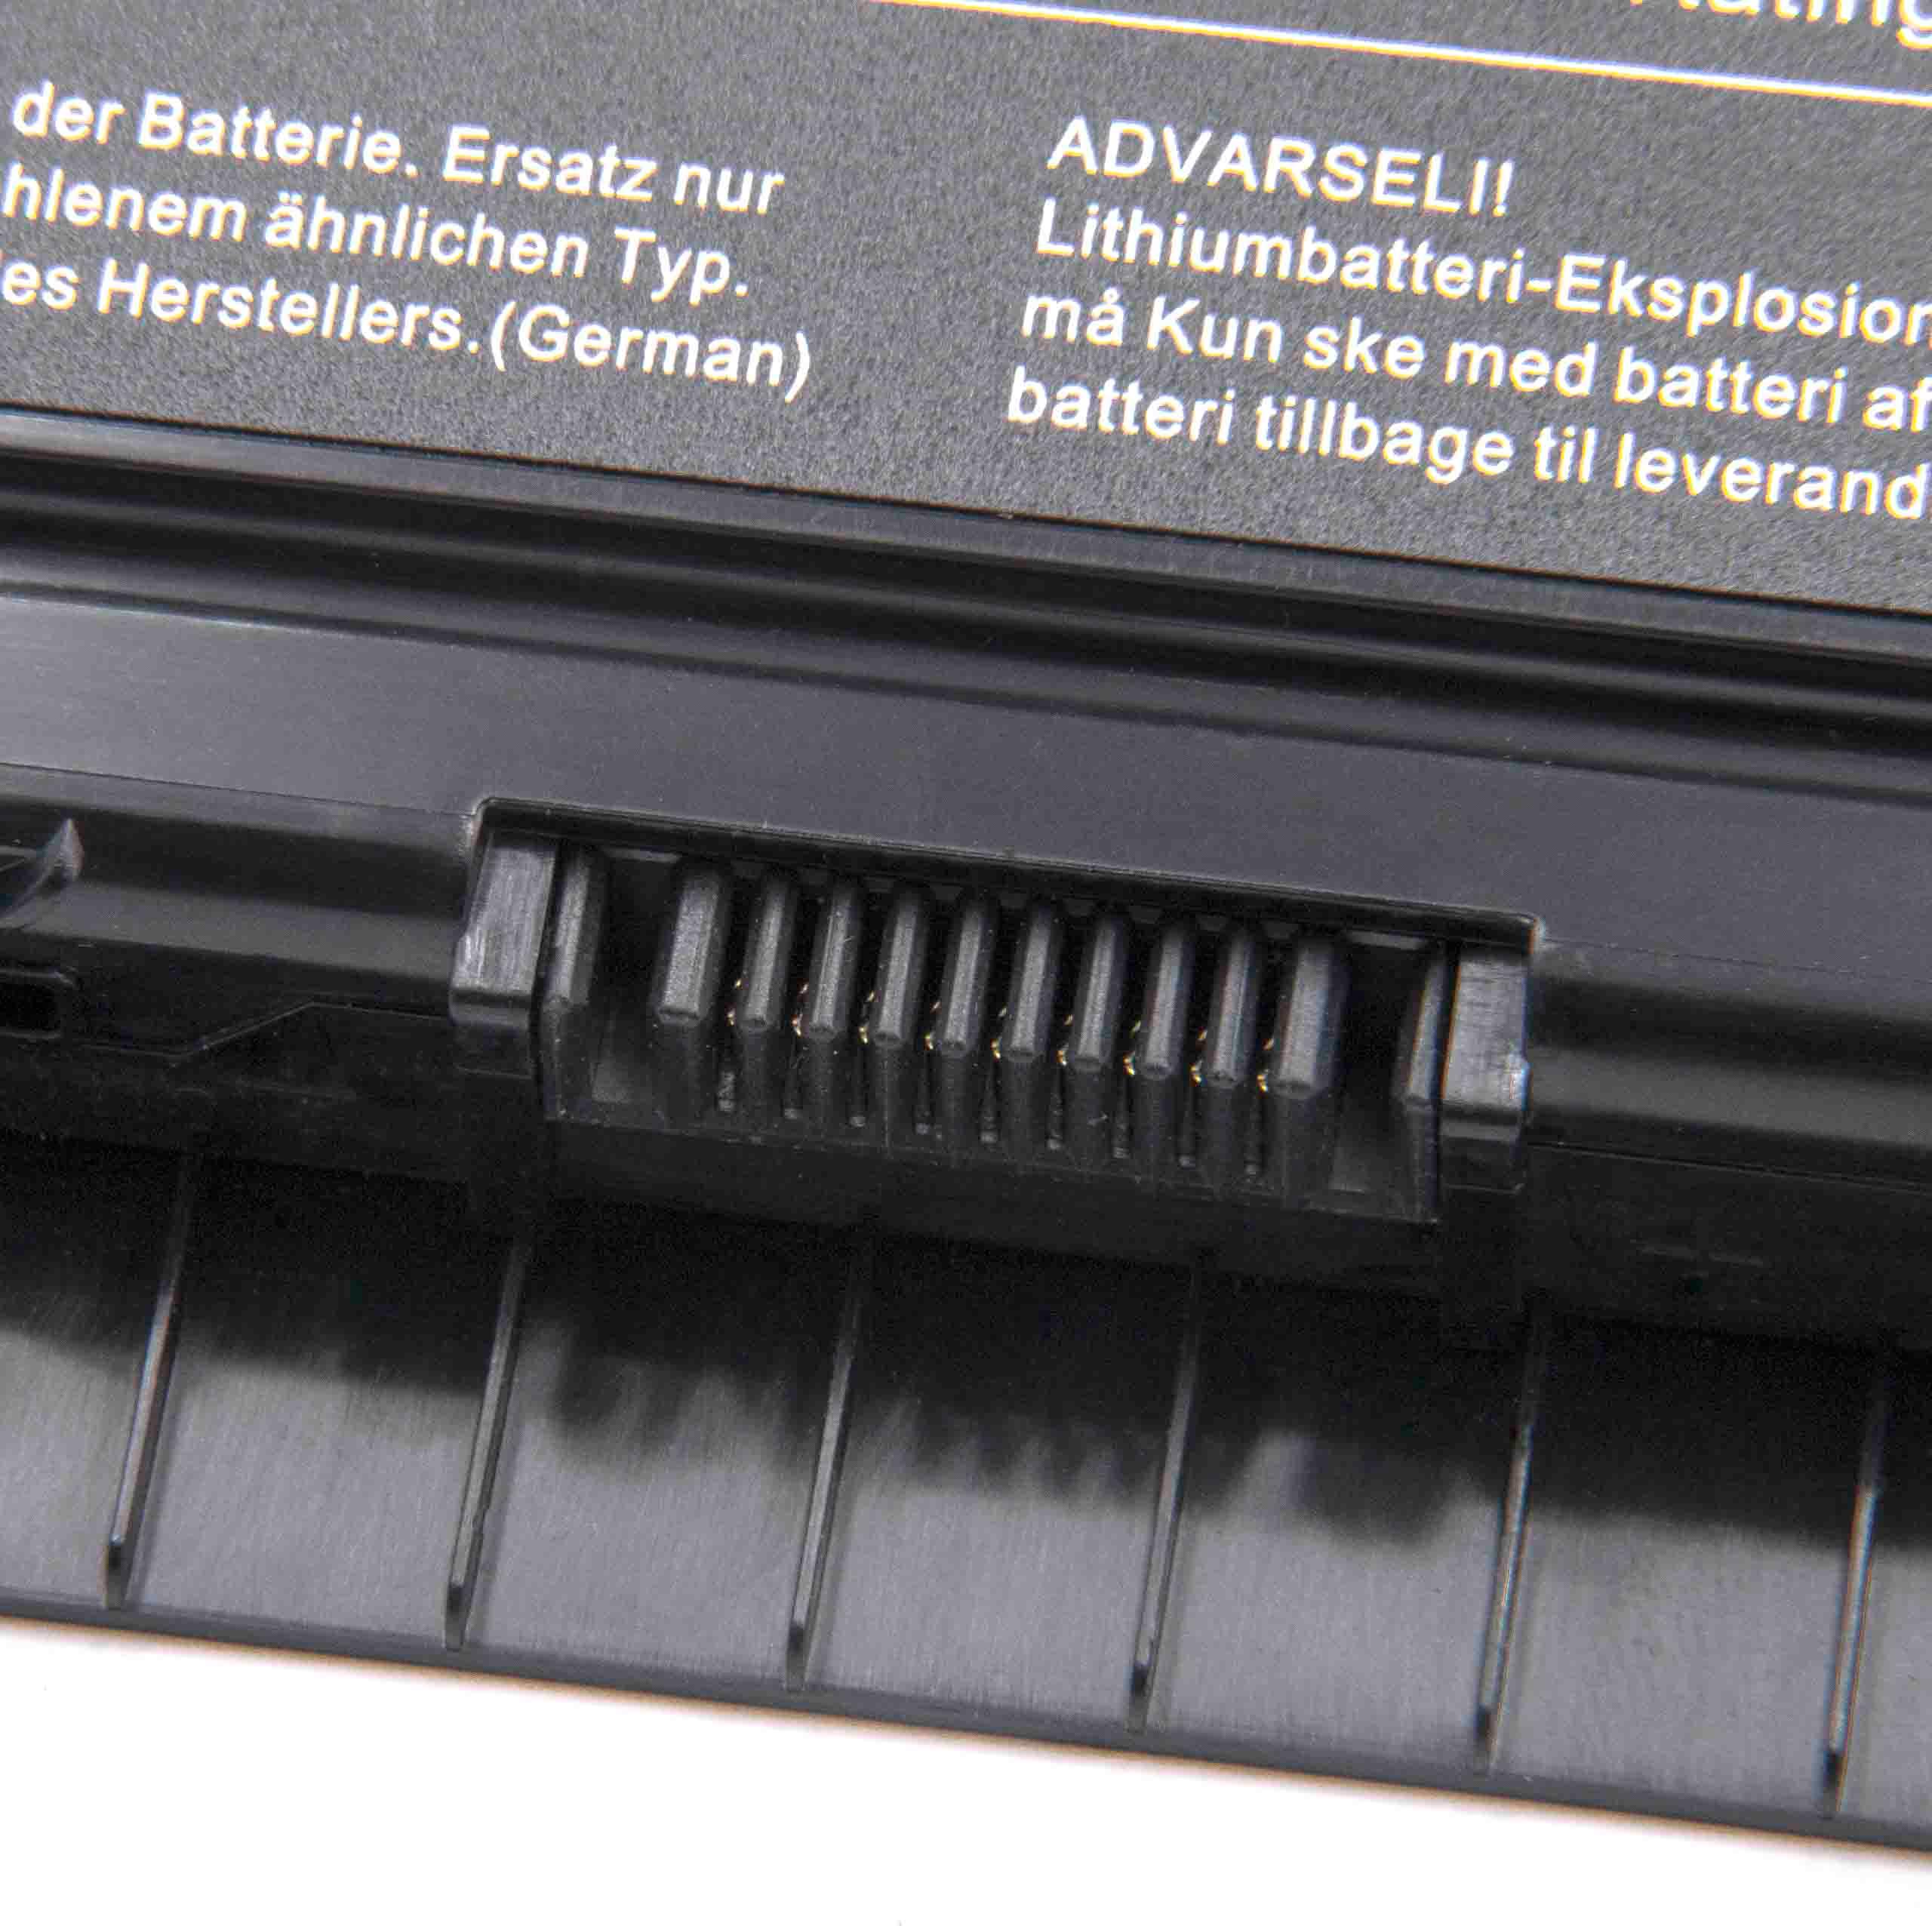 Akumulator do laptopa zamiennik Asus A32N14O5, A32LI9H, 0B110-00300000 - 4800 mAh 10,8 V Li-Ion, czarny